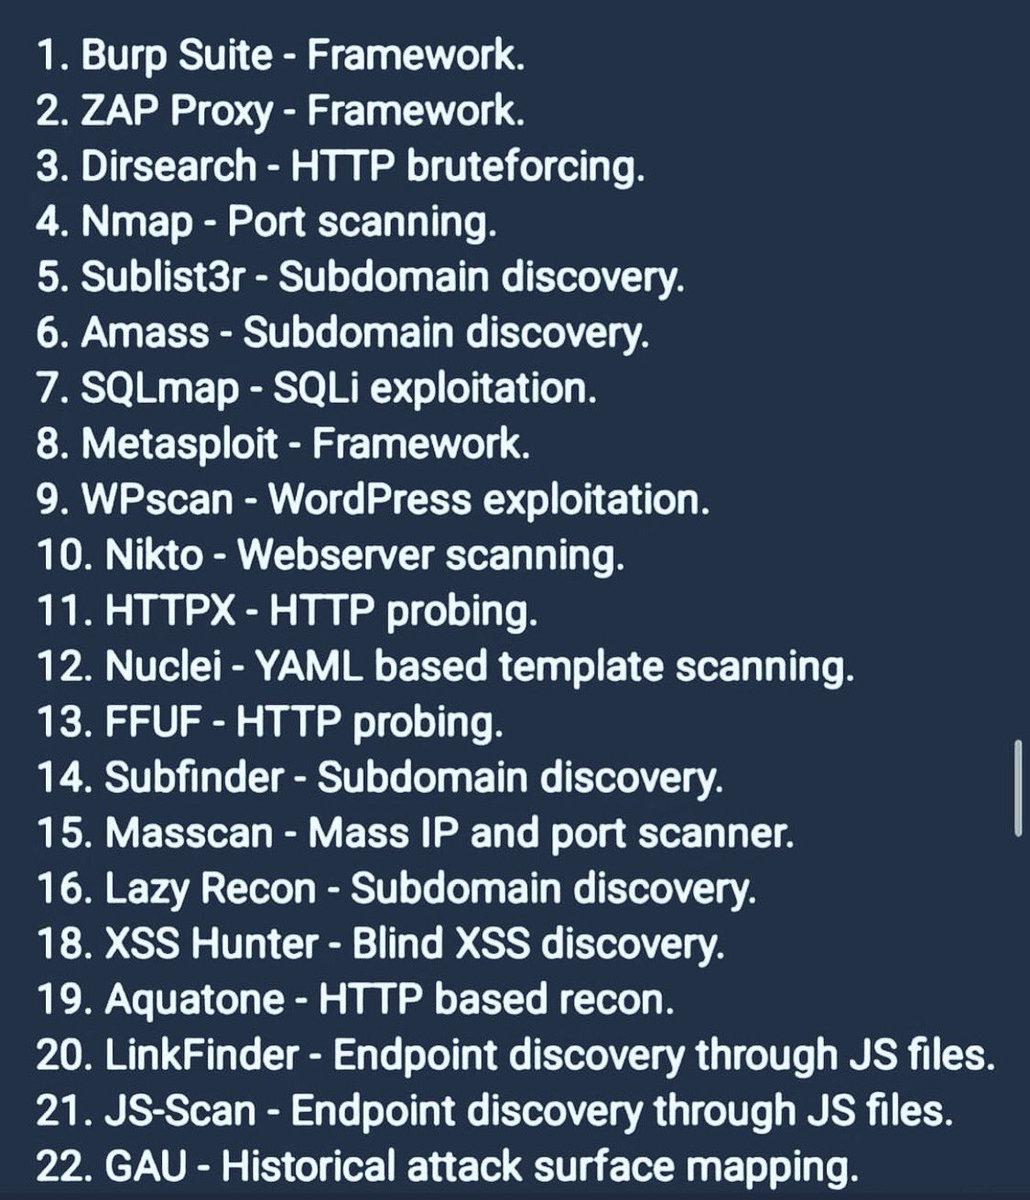 Top 22 Web Application Hacking Tools